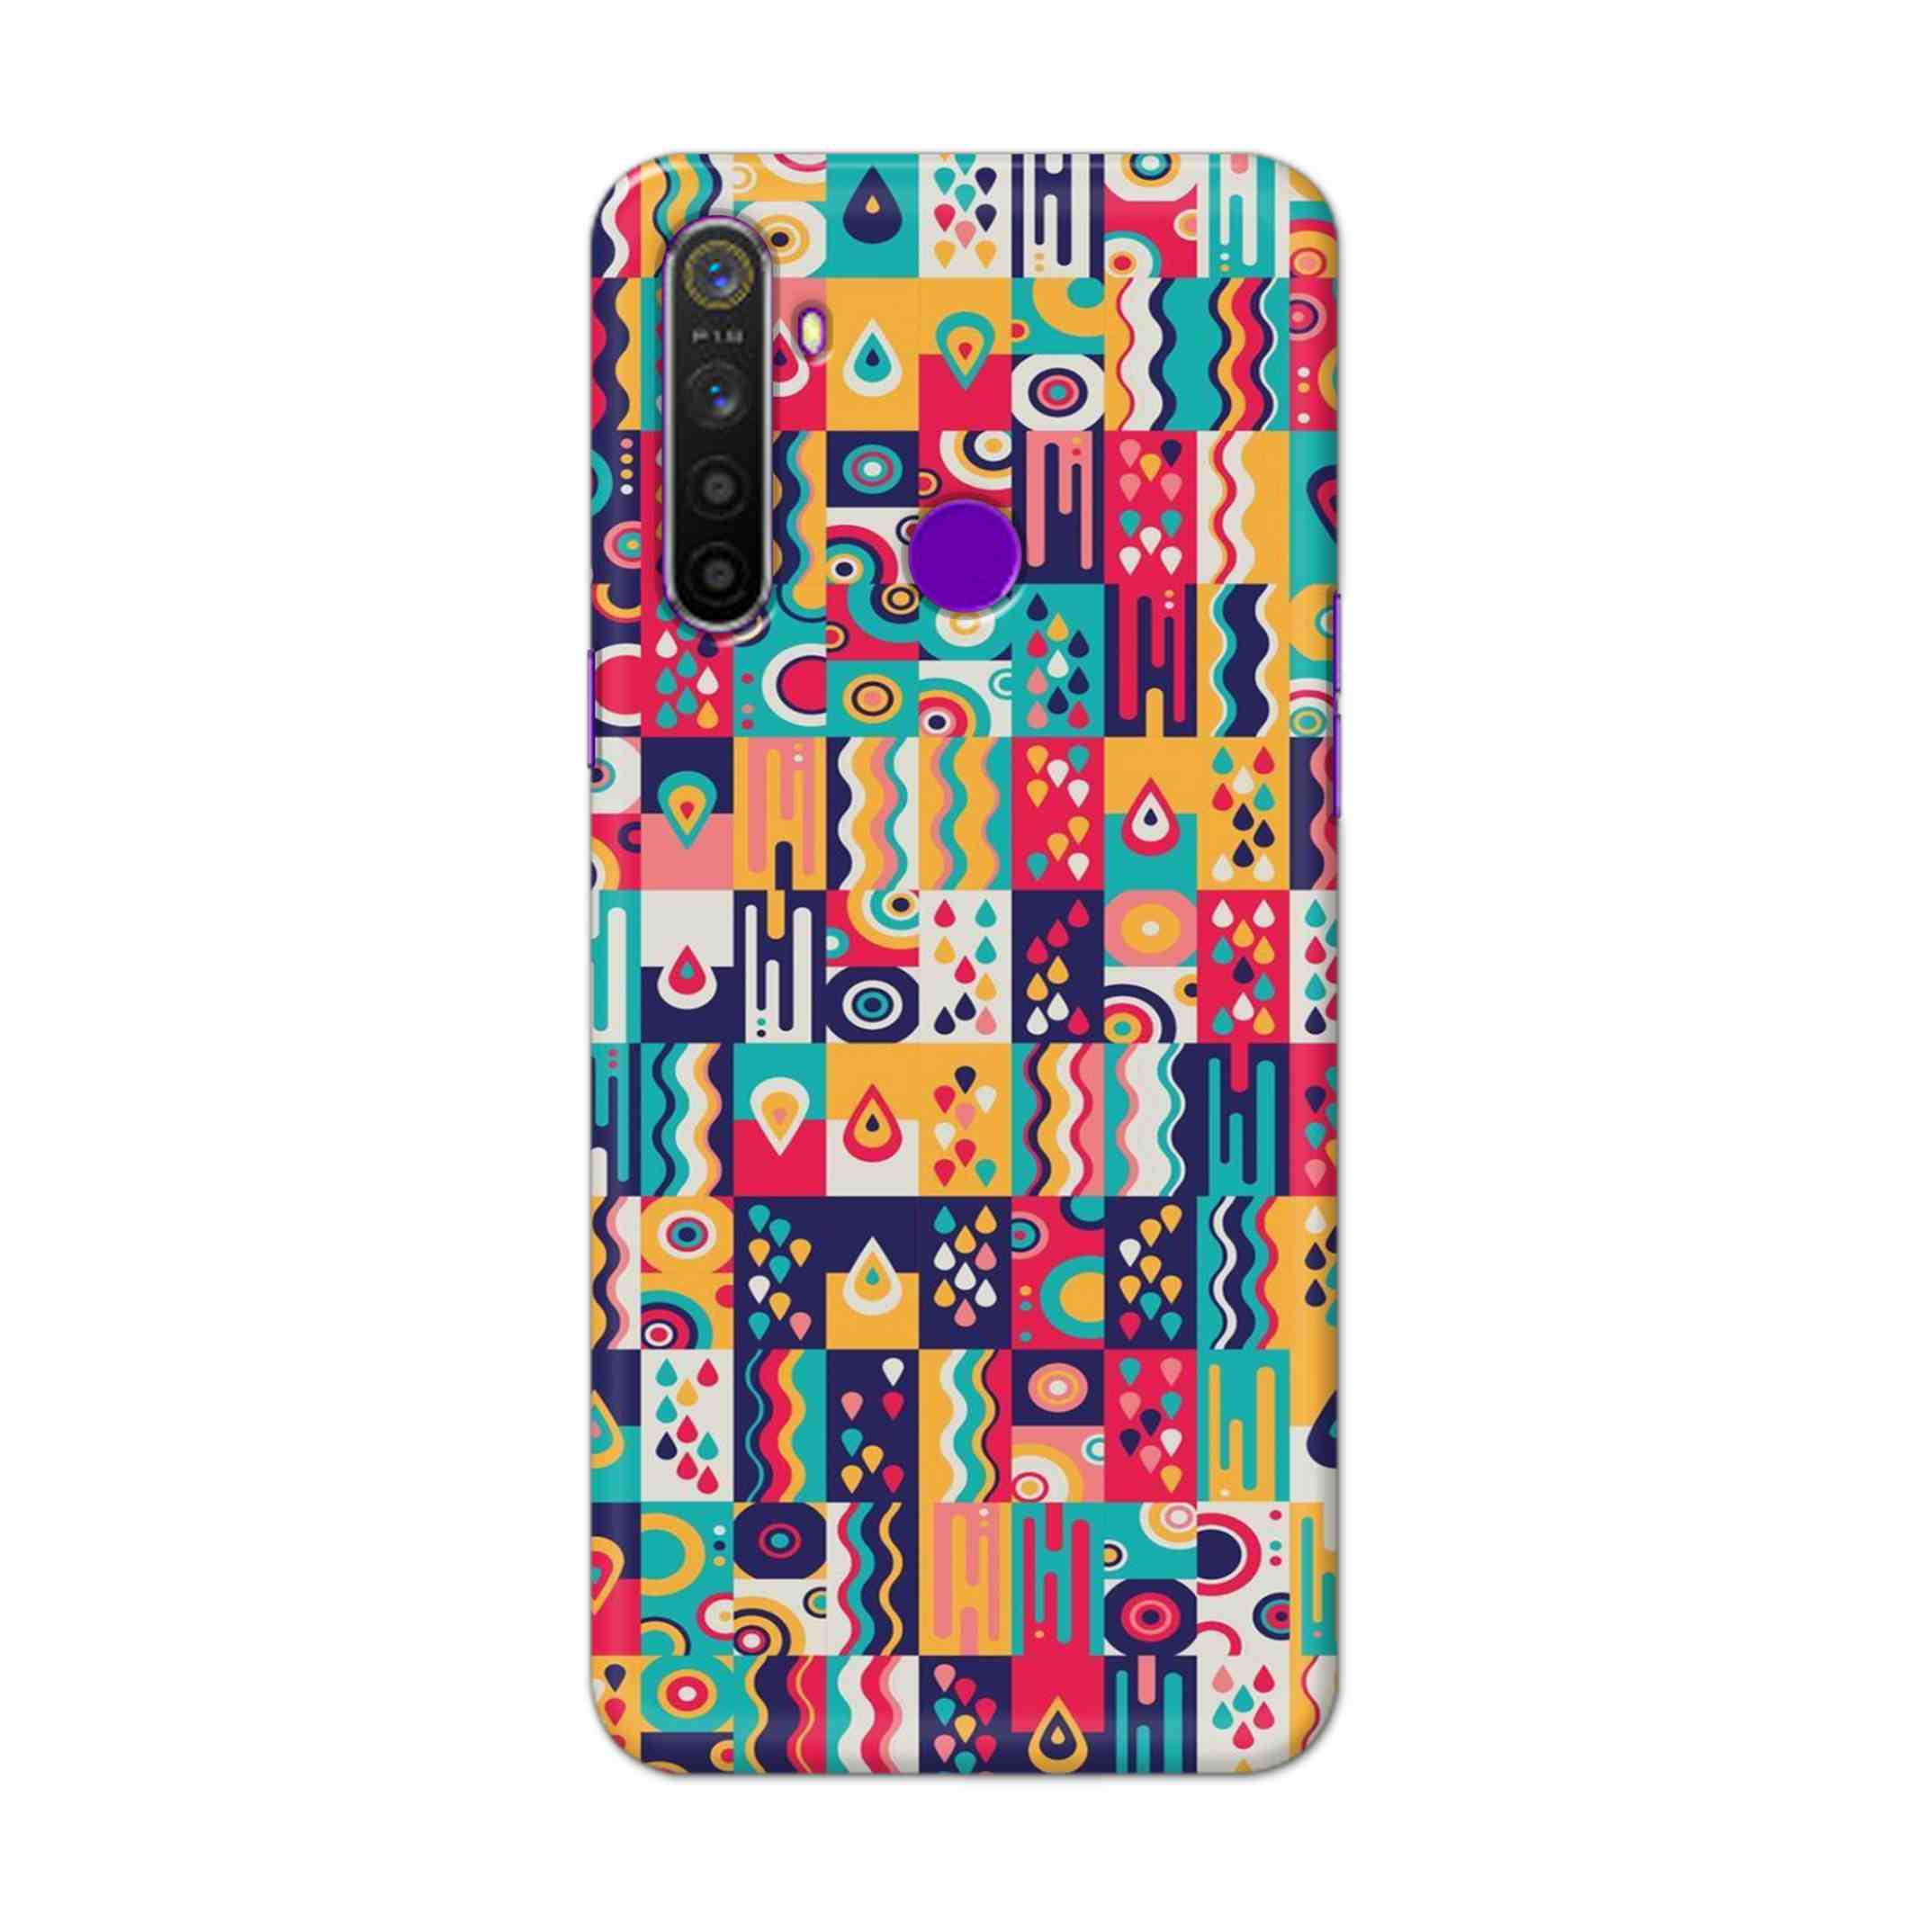 Buy Art Hard Back Mobile Phone Case Cover For Realme 5 Pro Online